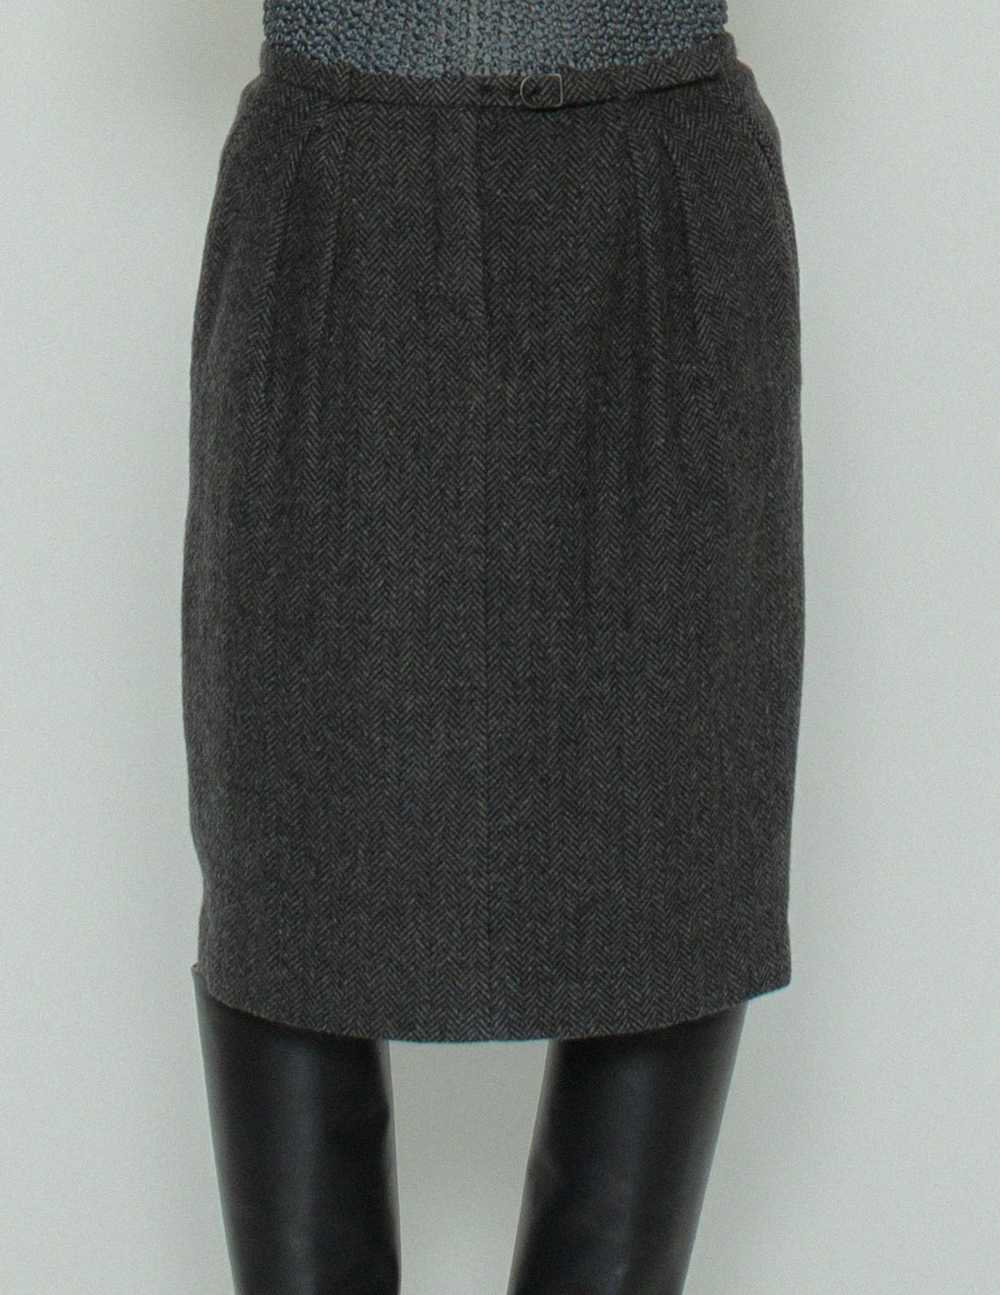 Hermès chevron cashmere skirt - image 4